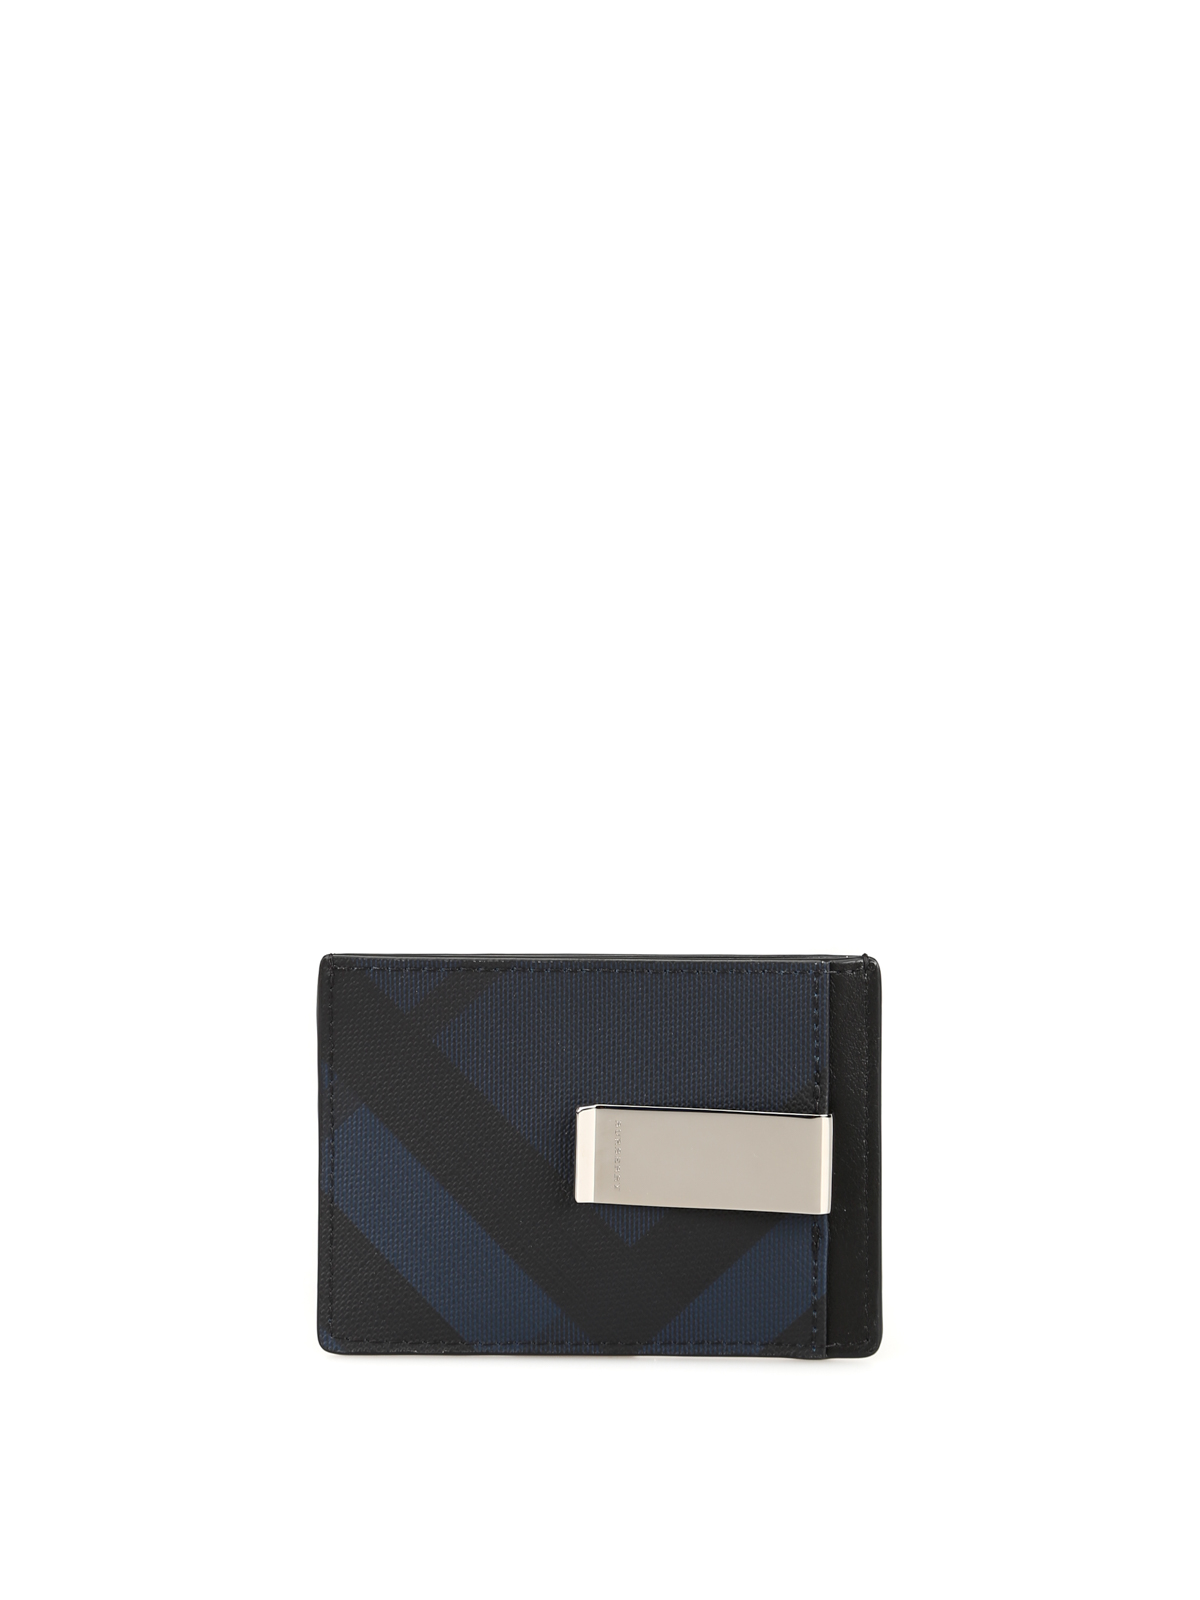 burberry money clip card case